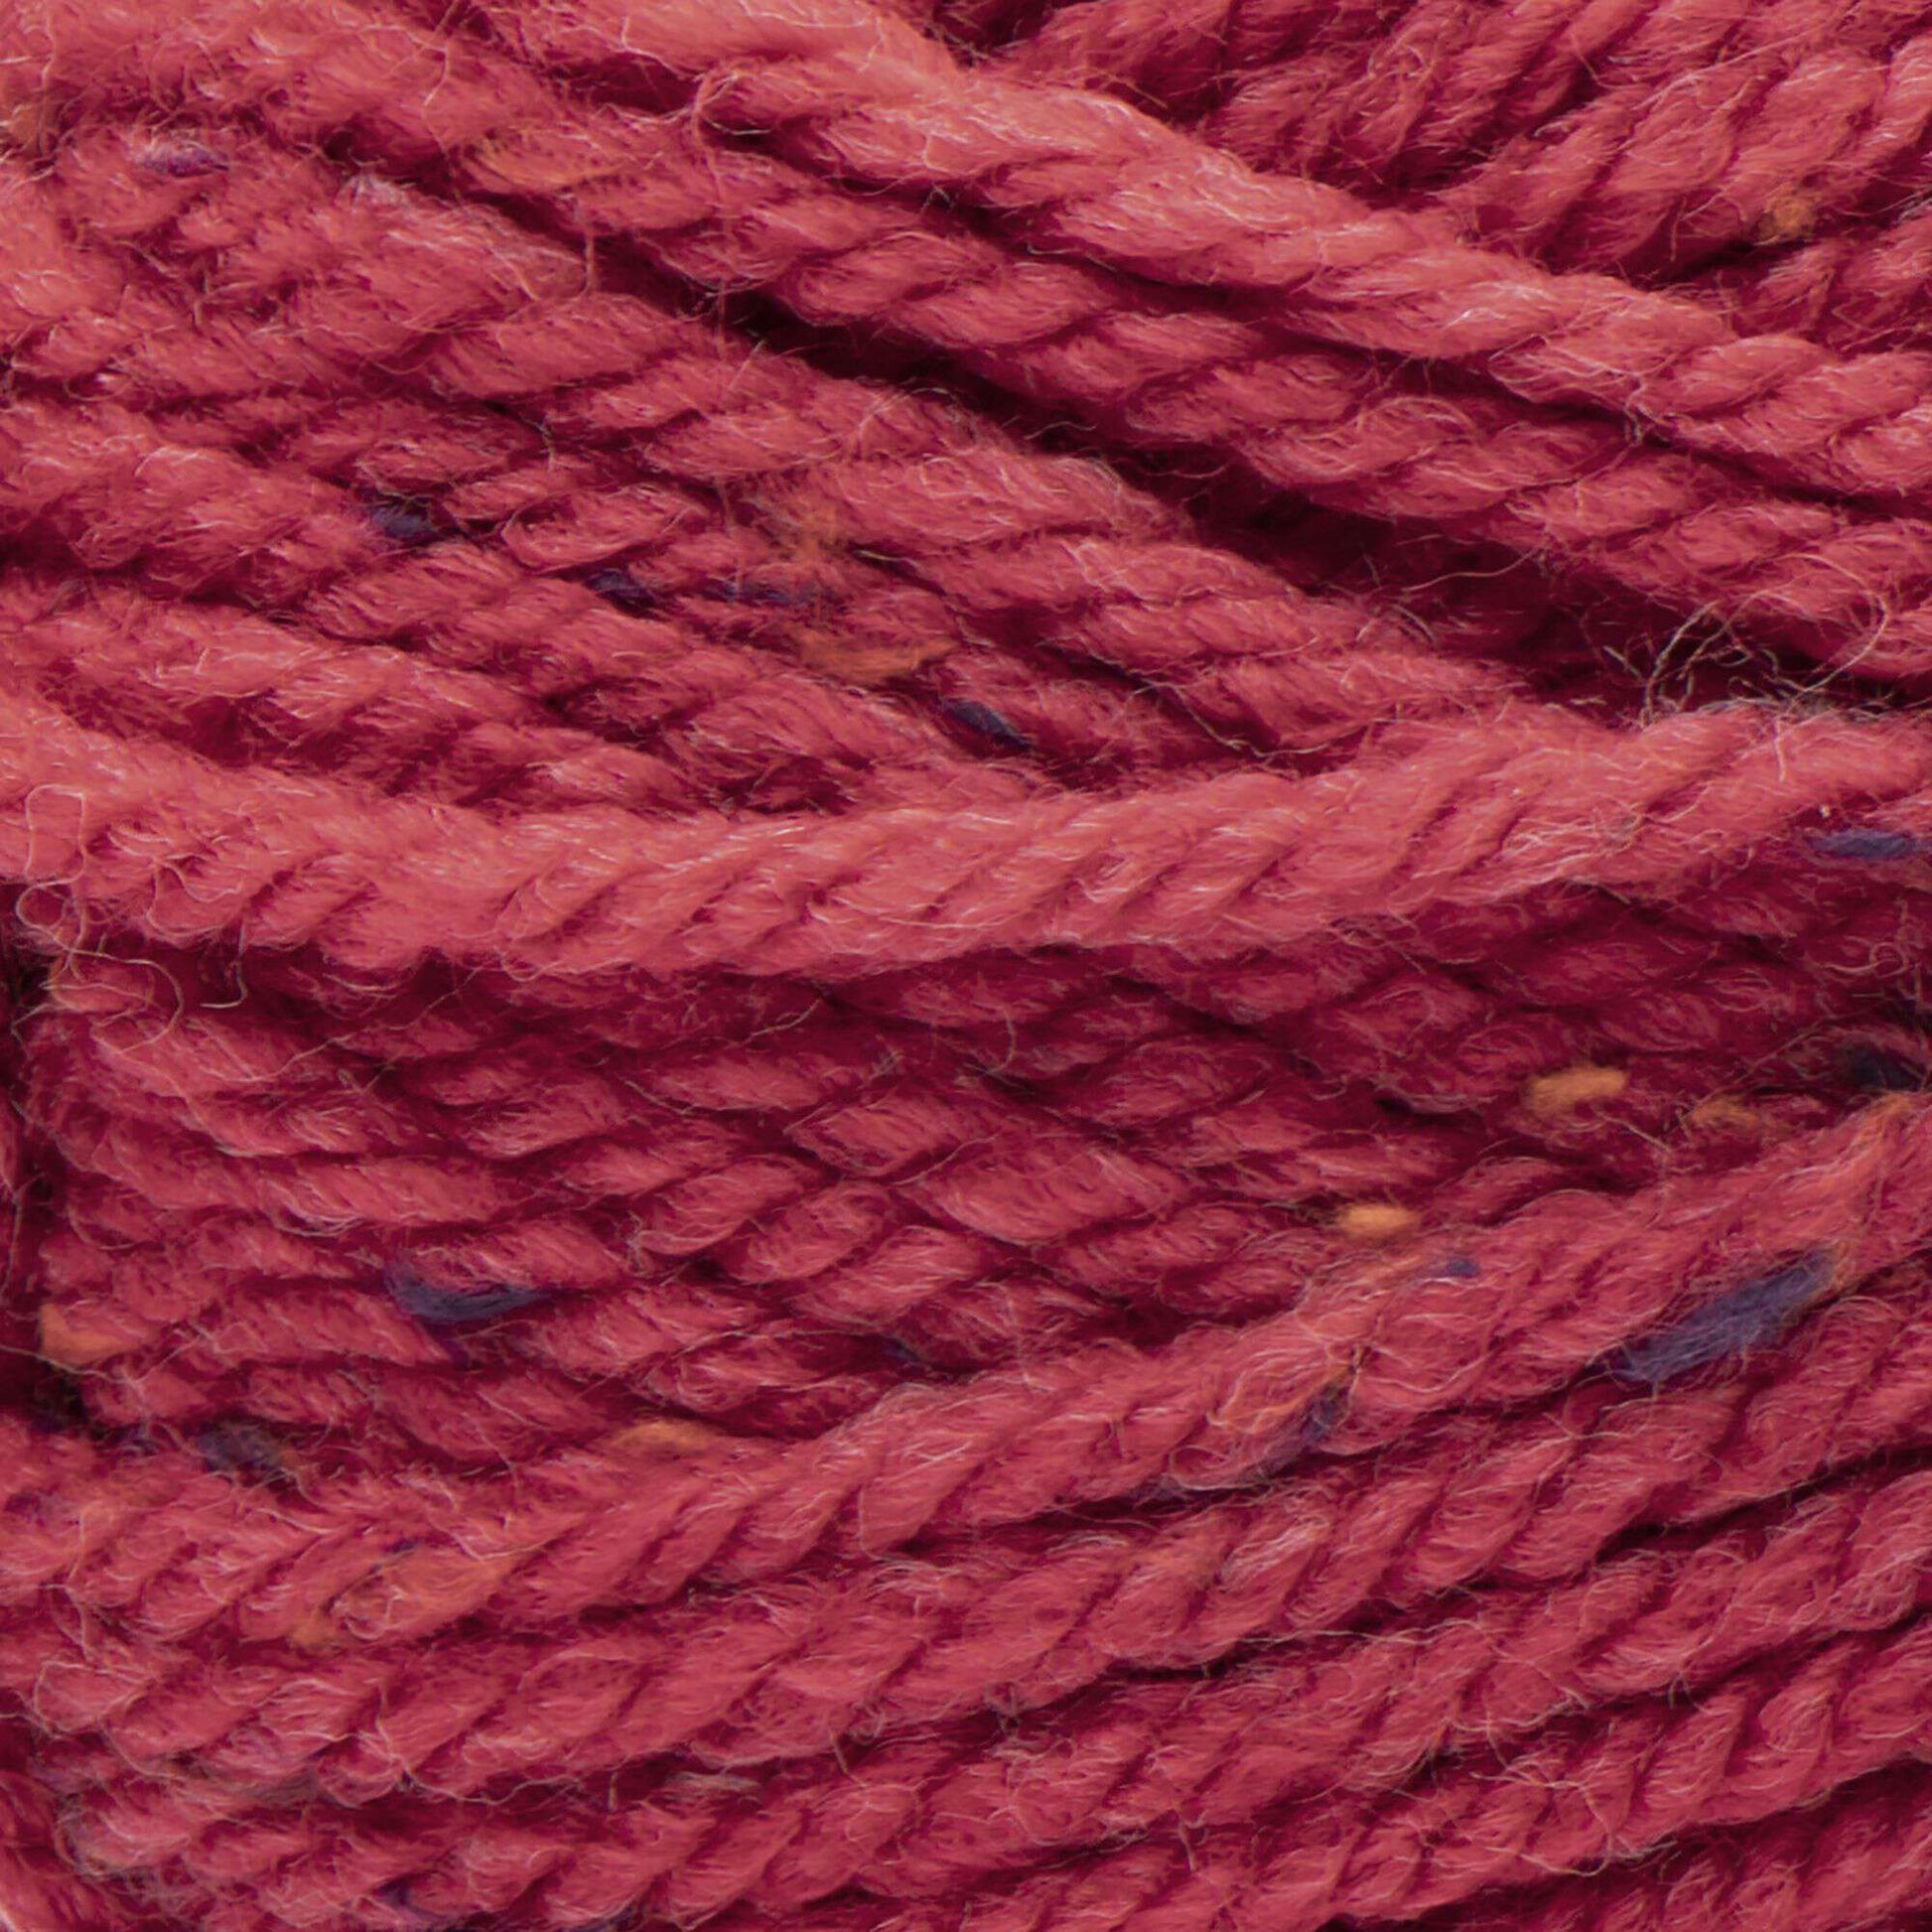 Patons Highland Bulky Tweeds Yarn